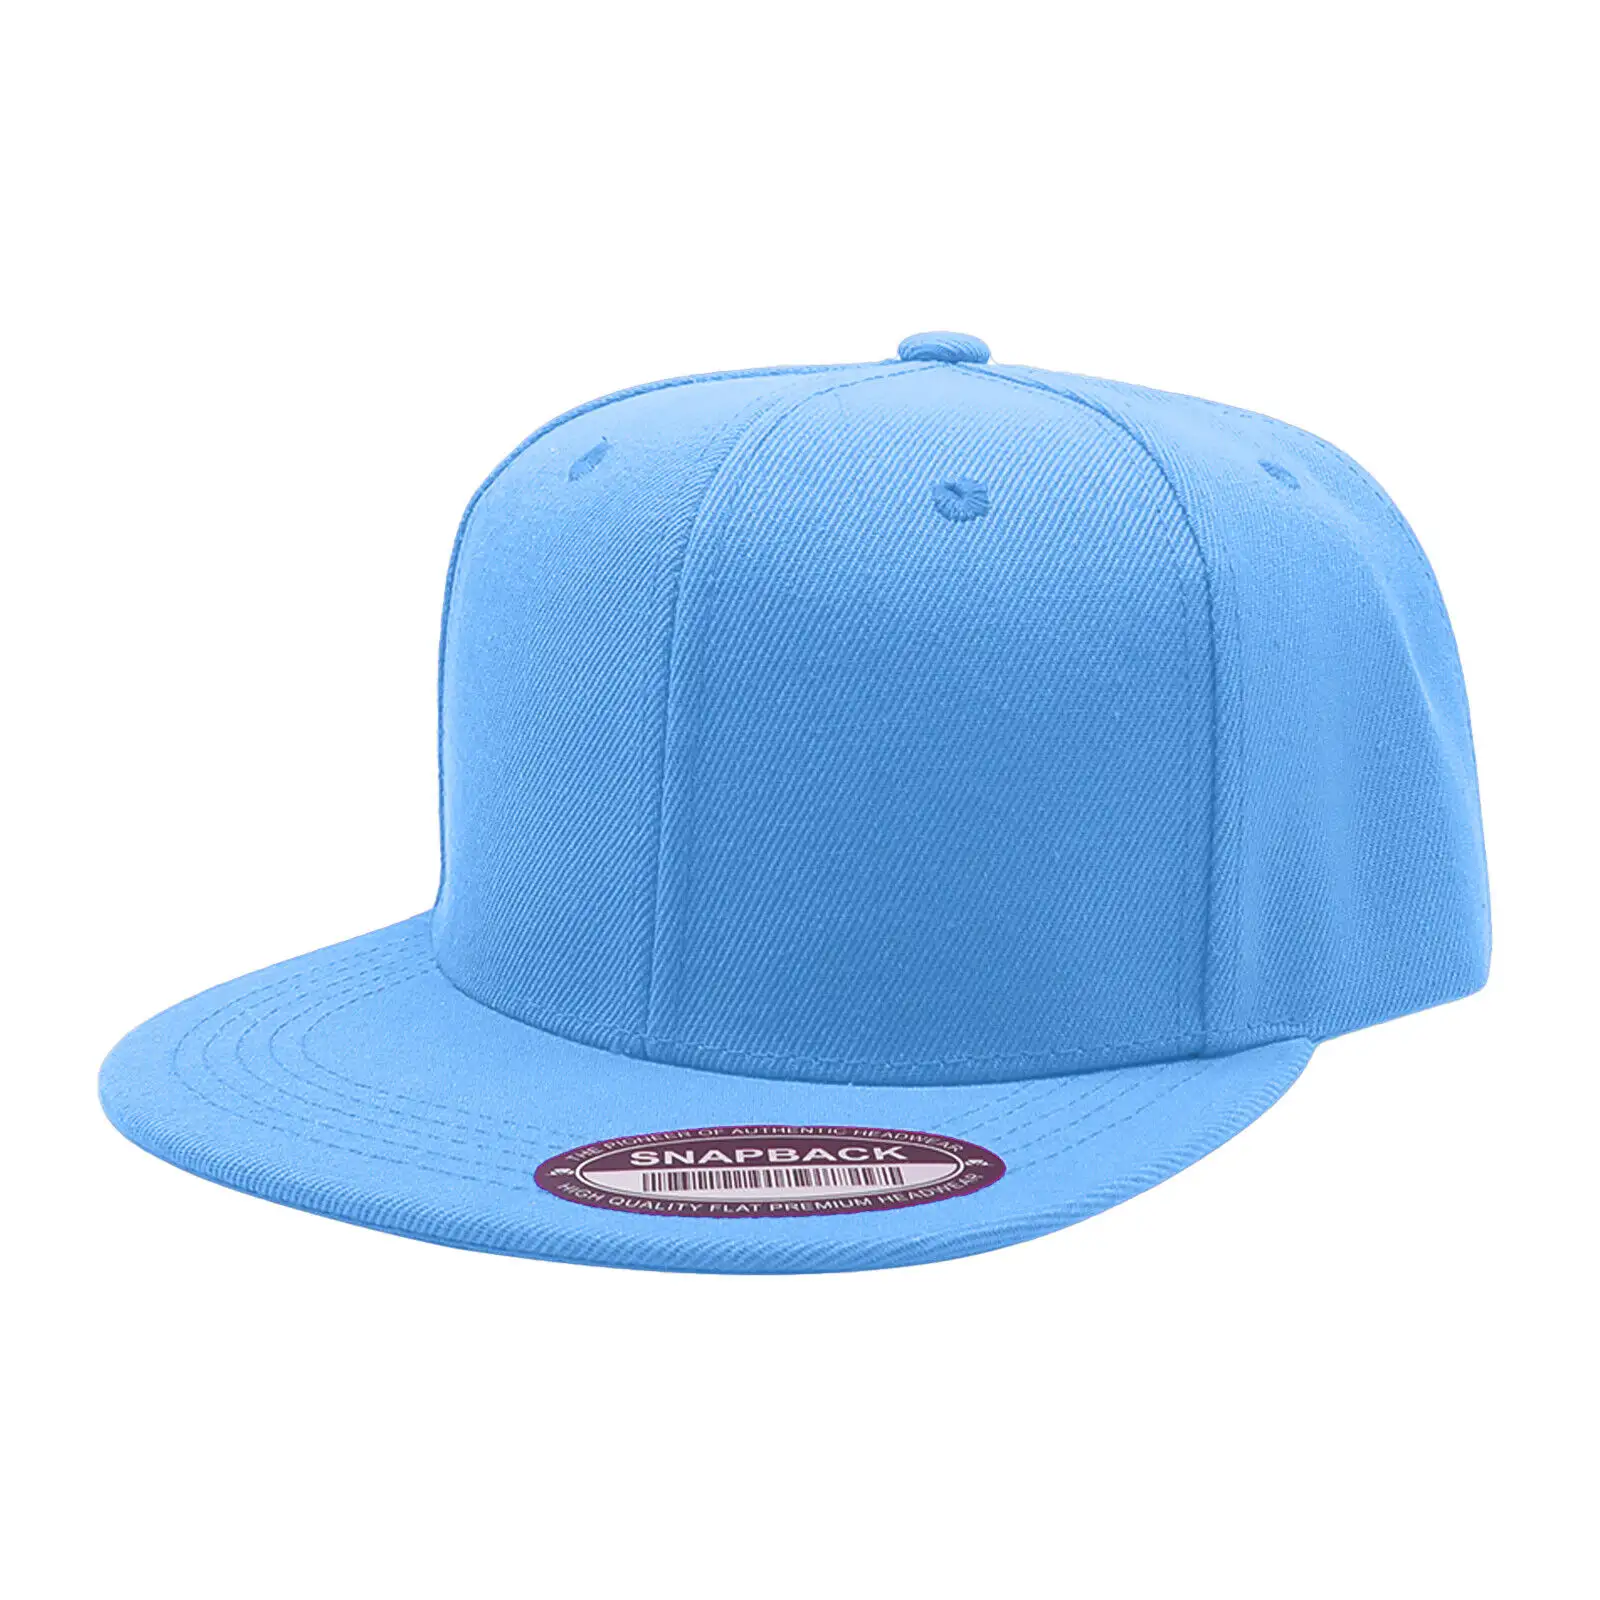 Sombrero de cuerda Logotipo bordado personalizado 5 paneles 100% algodón Snap Back Dad Cap White Performance Golf Gorra de béisbol